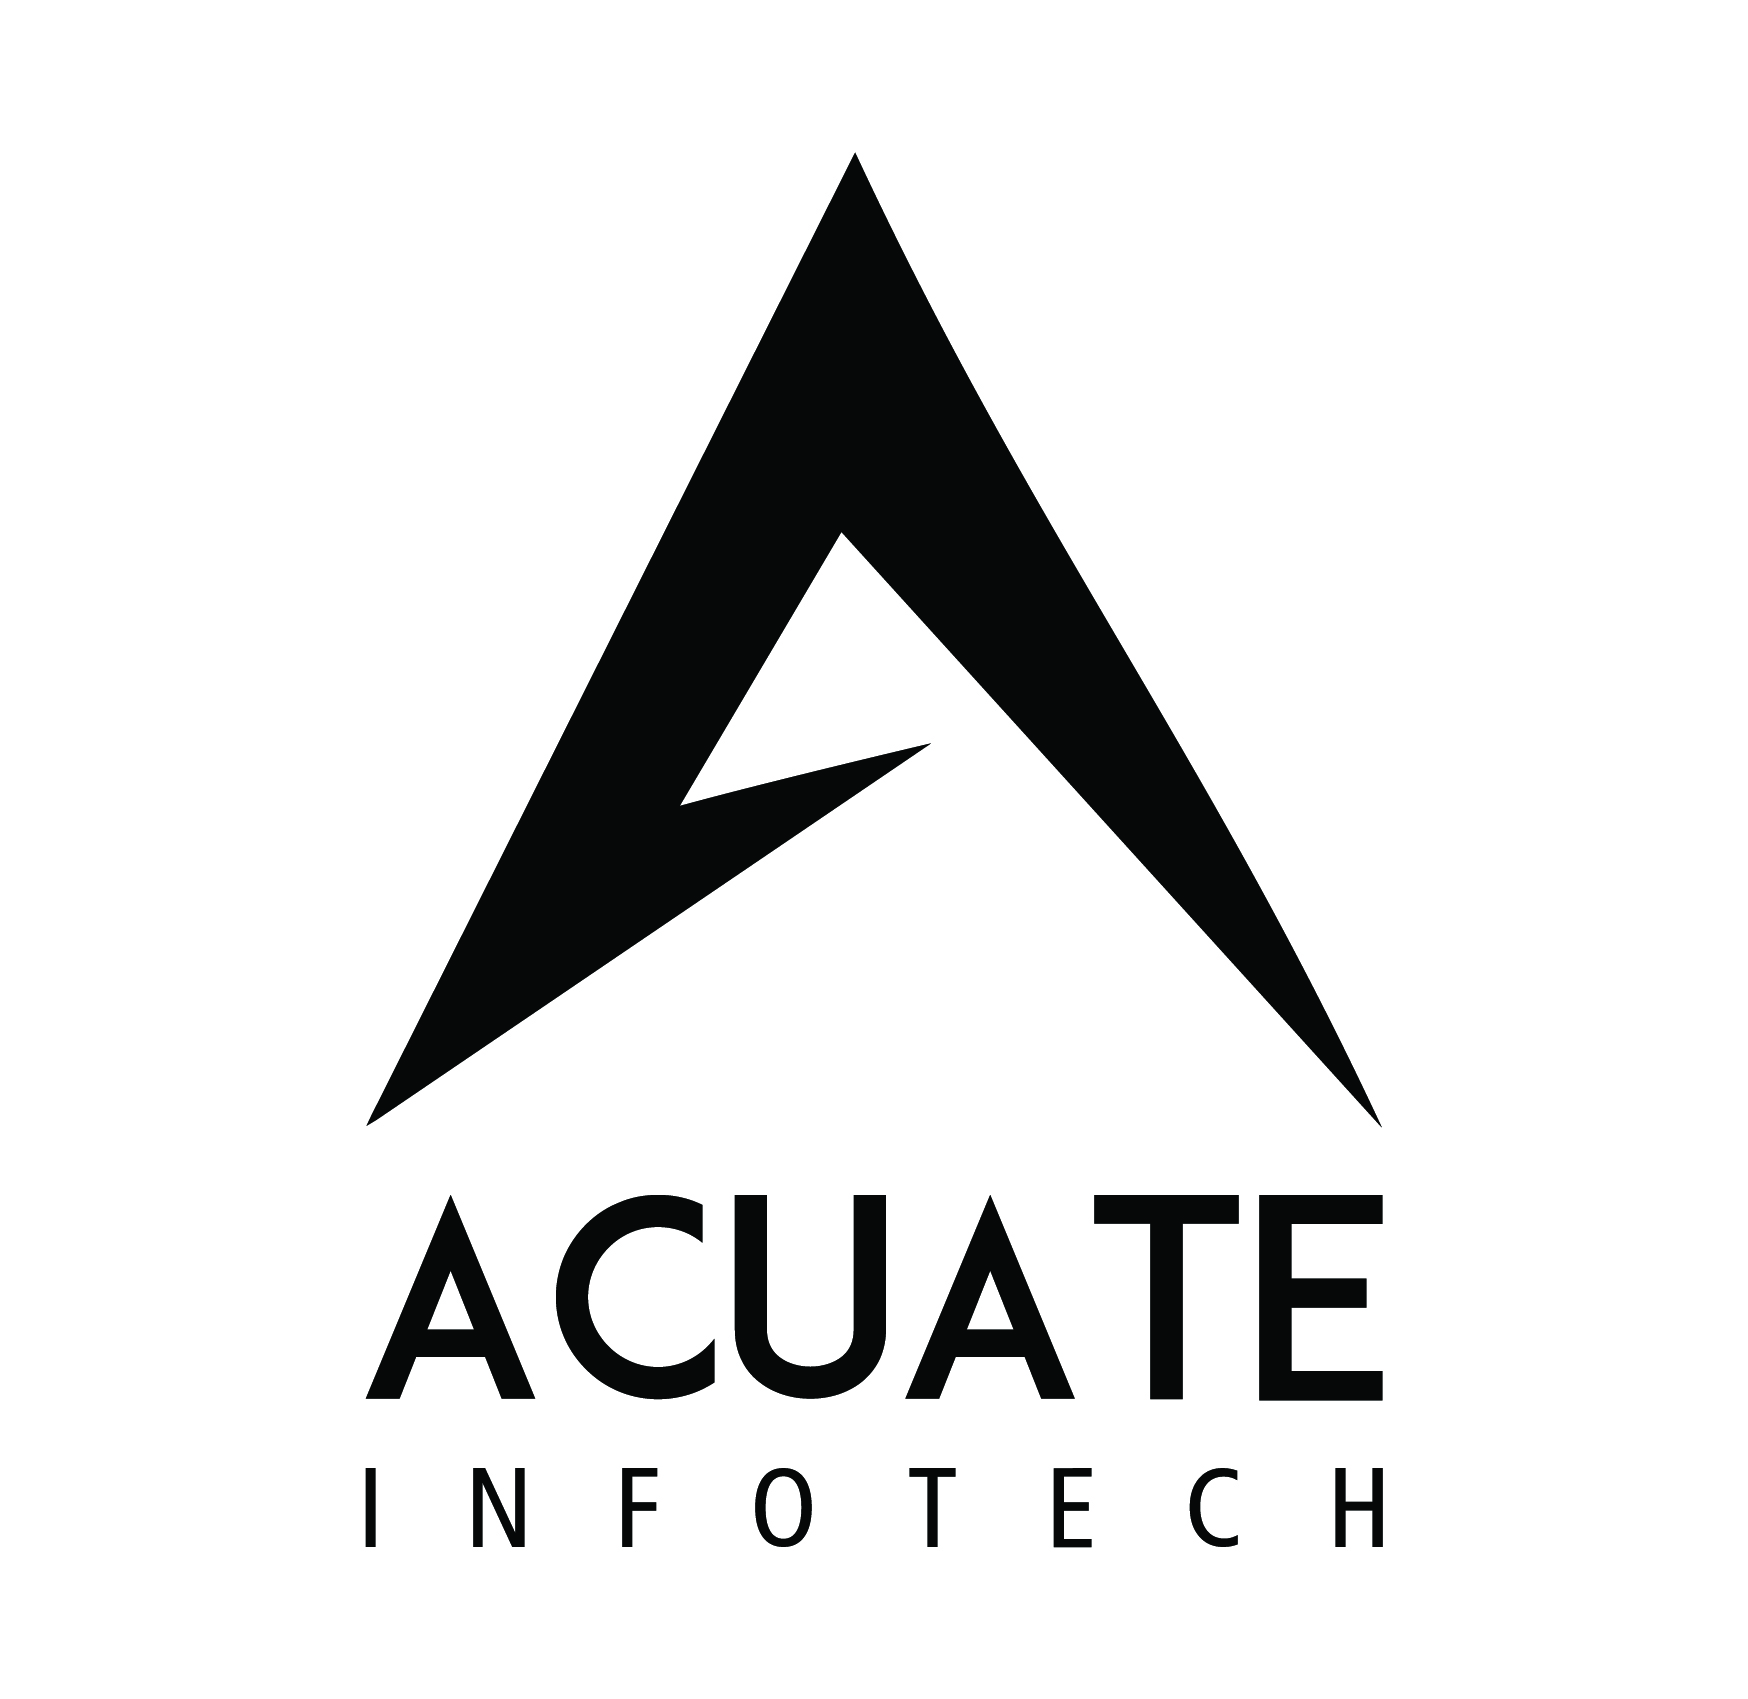 Acuate Infotech